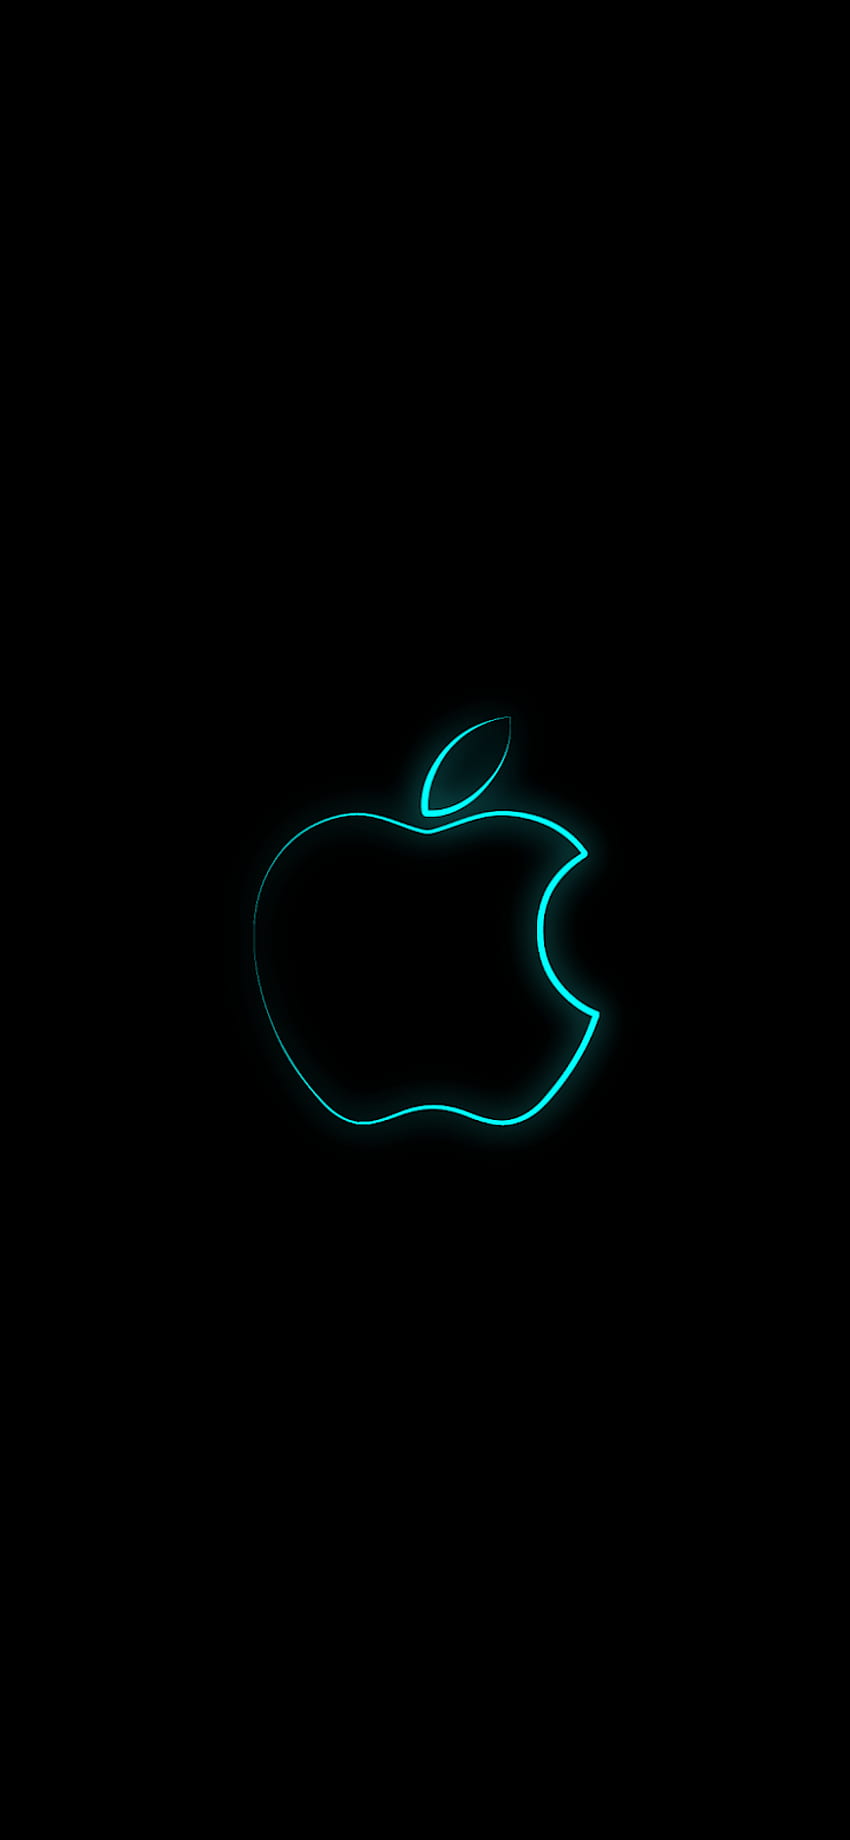 iphone - Apple logo neon effect. iZe HD phone wallpaper